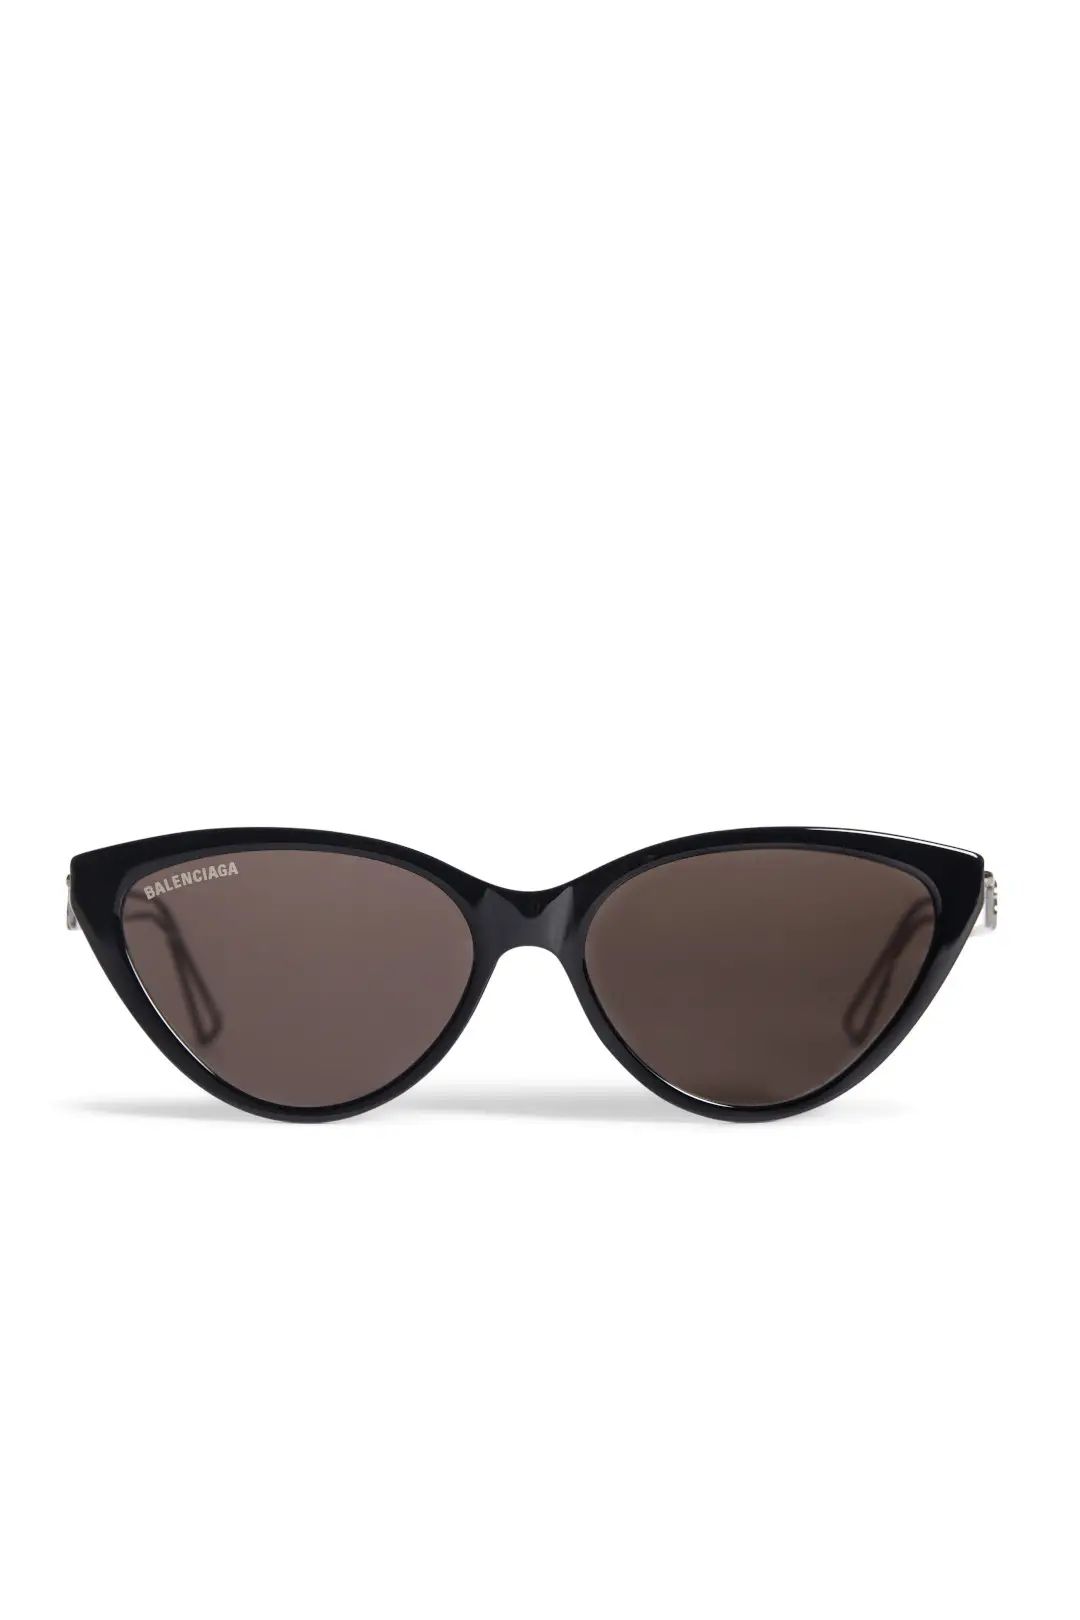 Balenciaga Cat Eye Sunglasses | Rent the Runway